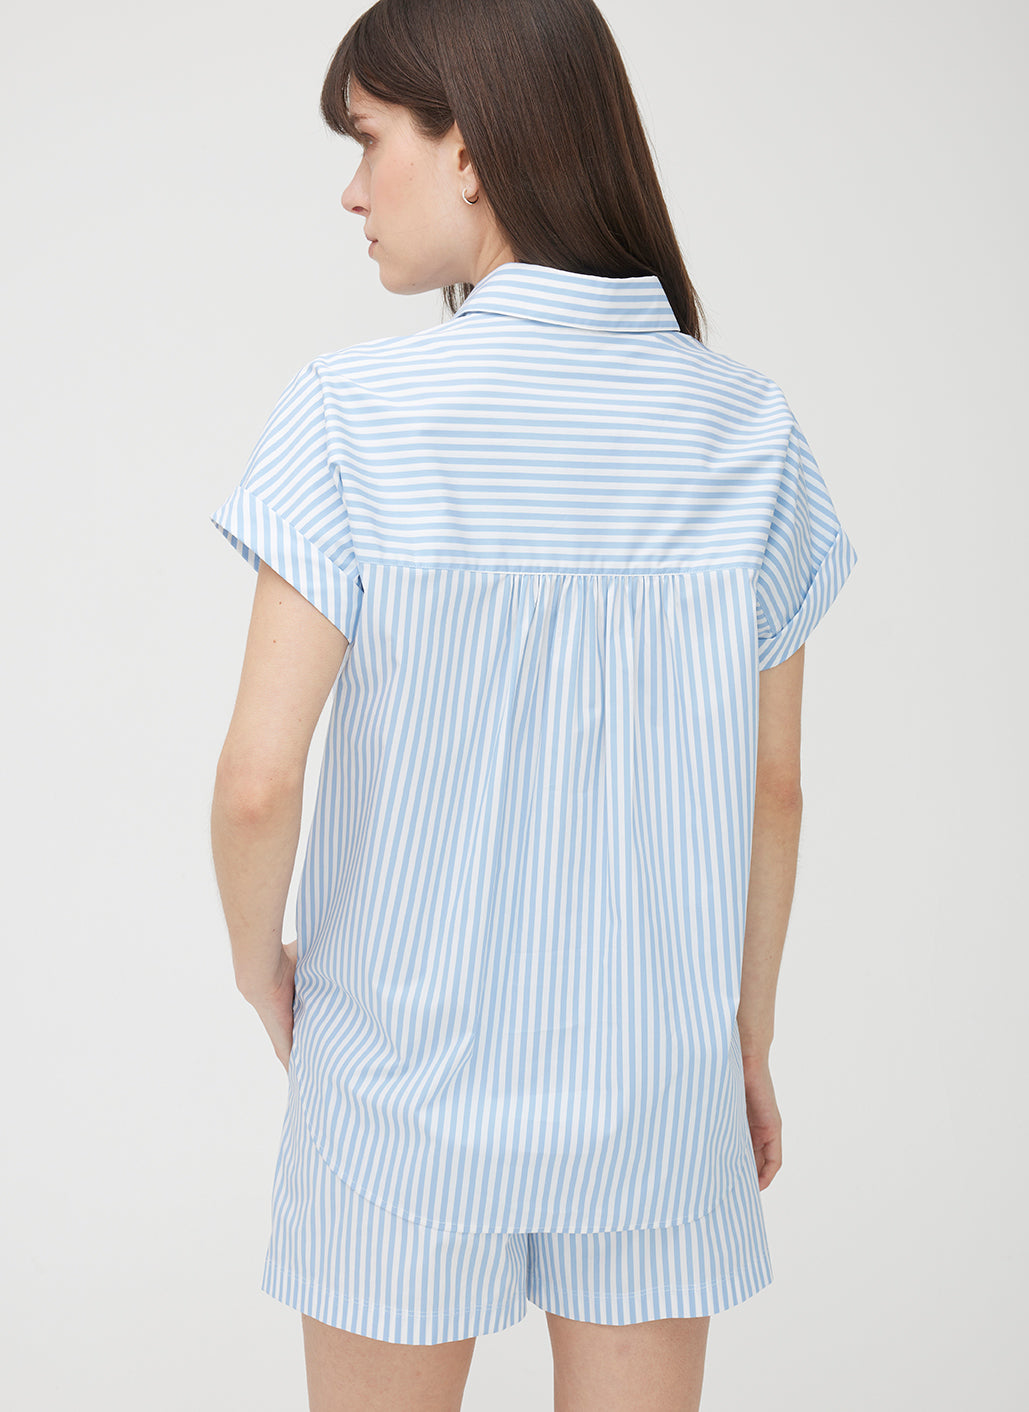 Marbella Short Sleeve Shirt ?? | S || Bright White/Cool Blue Stripe